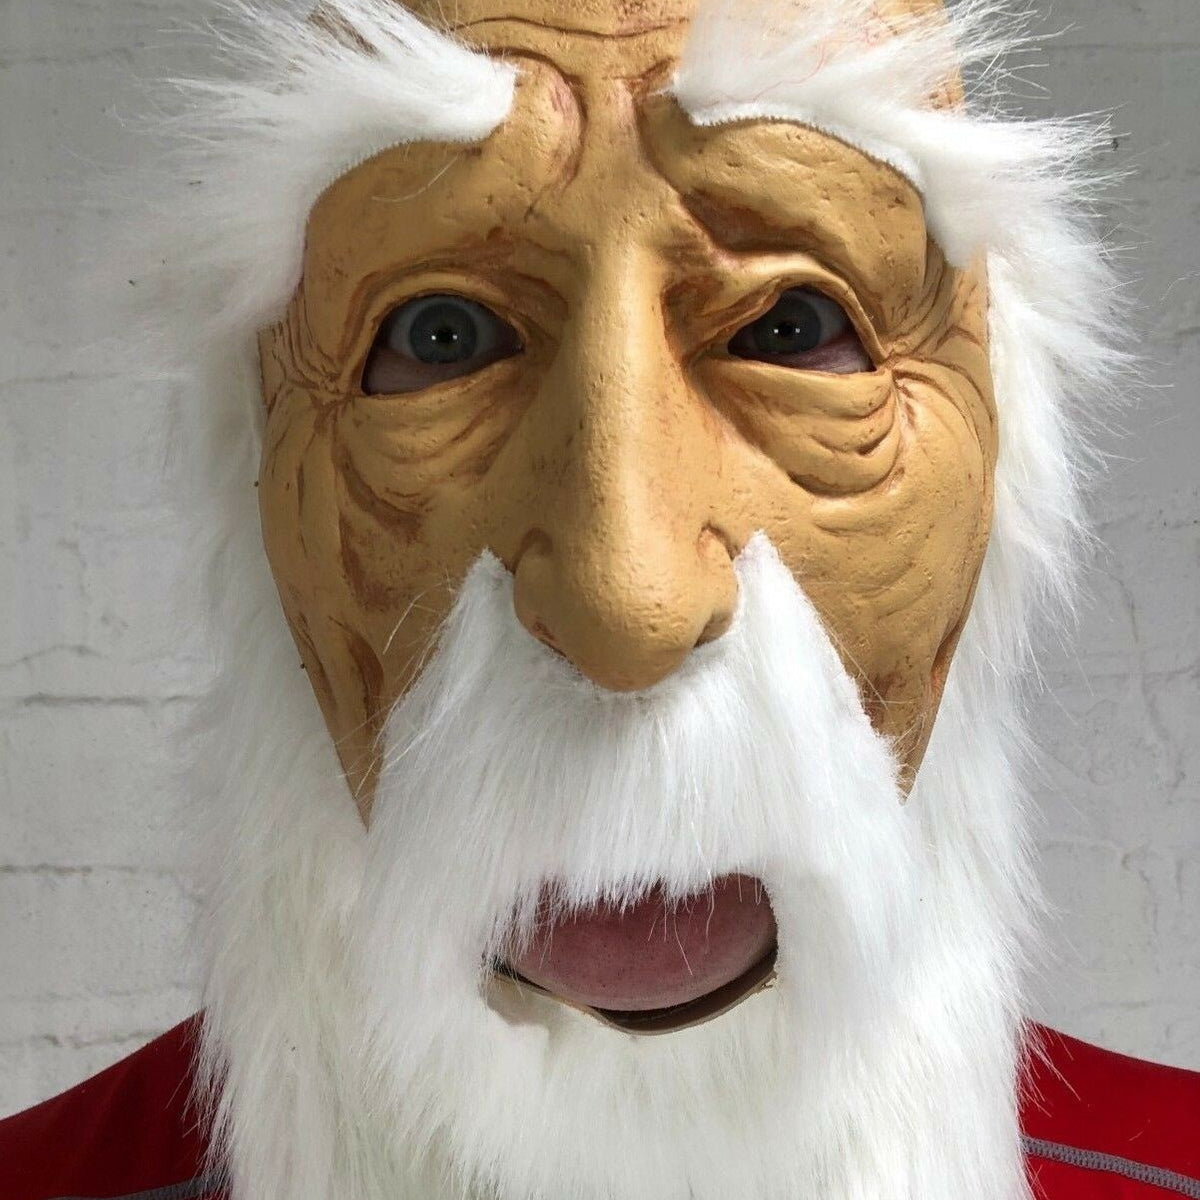 Long Beard Old Man Mask